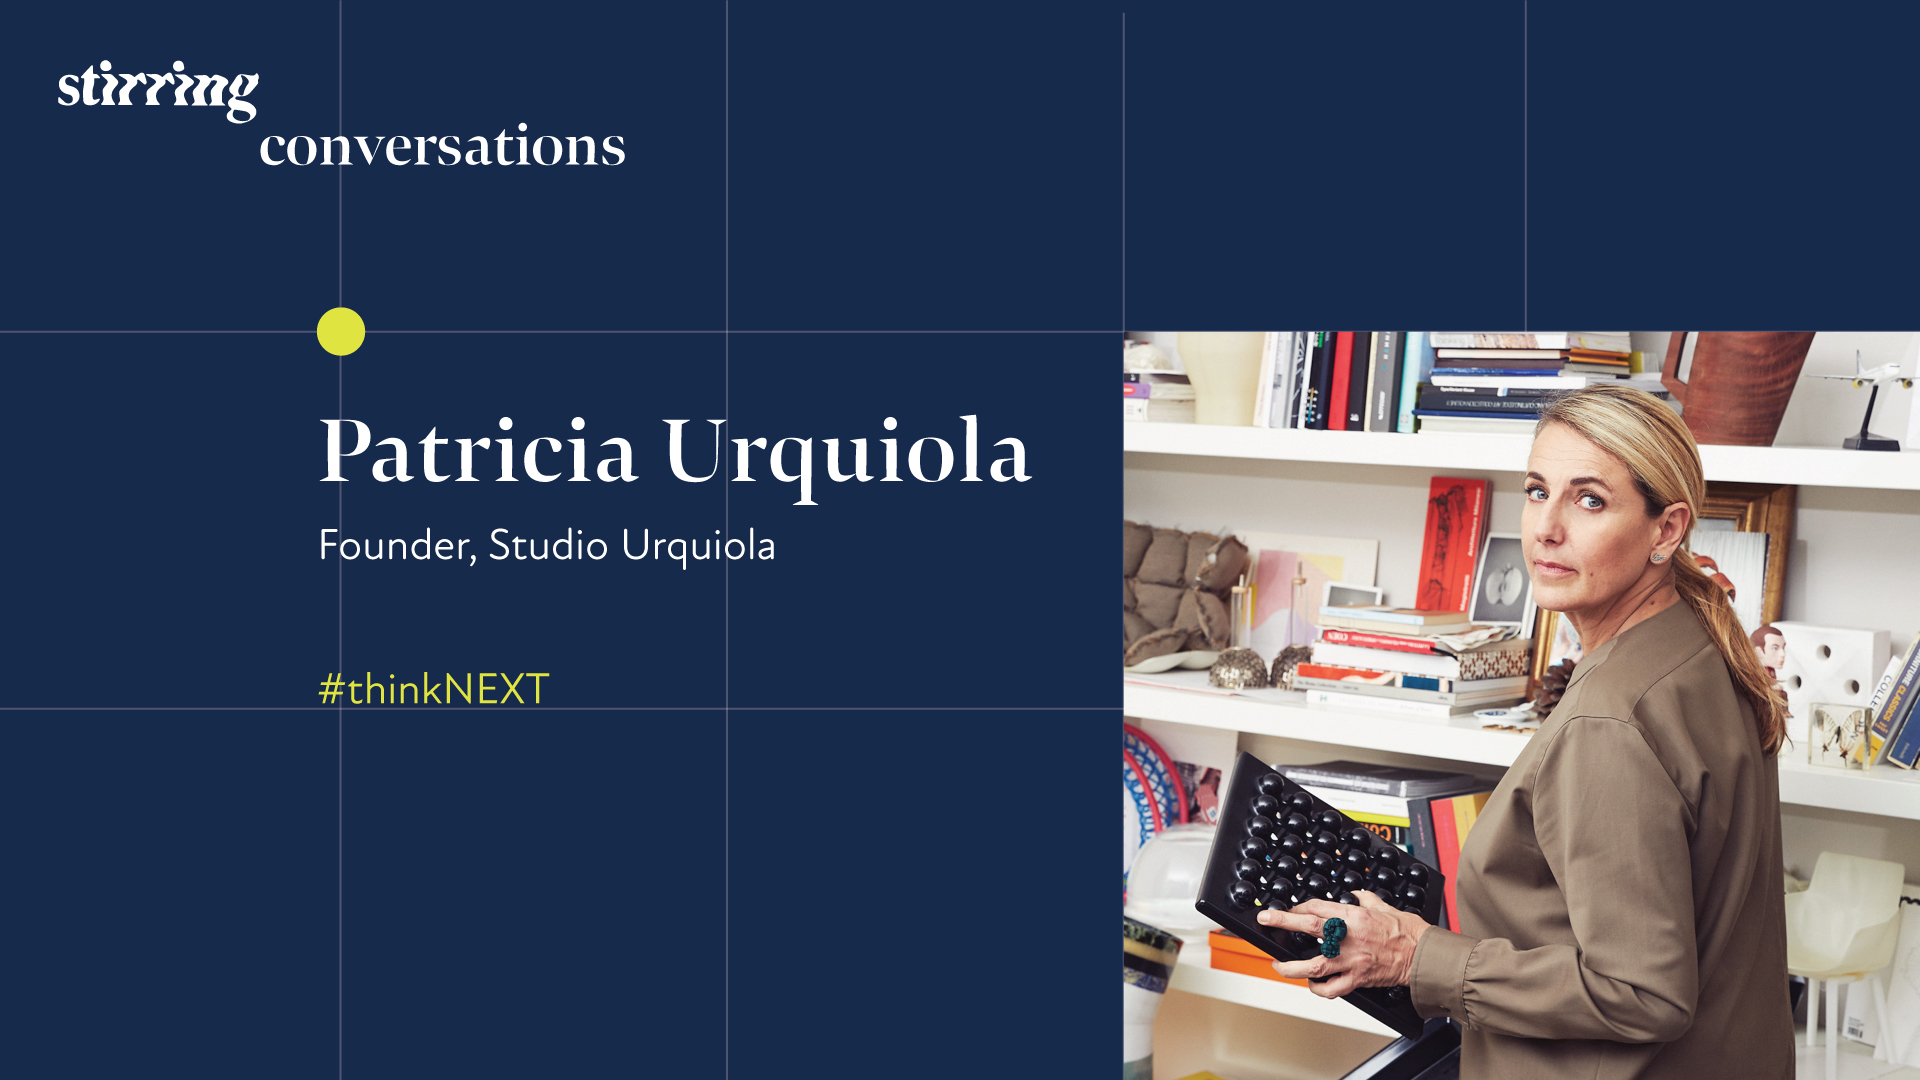 The interview with architect and interior designer Patricia Urquiola